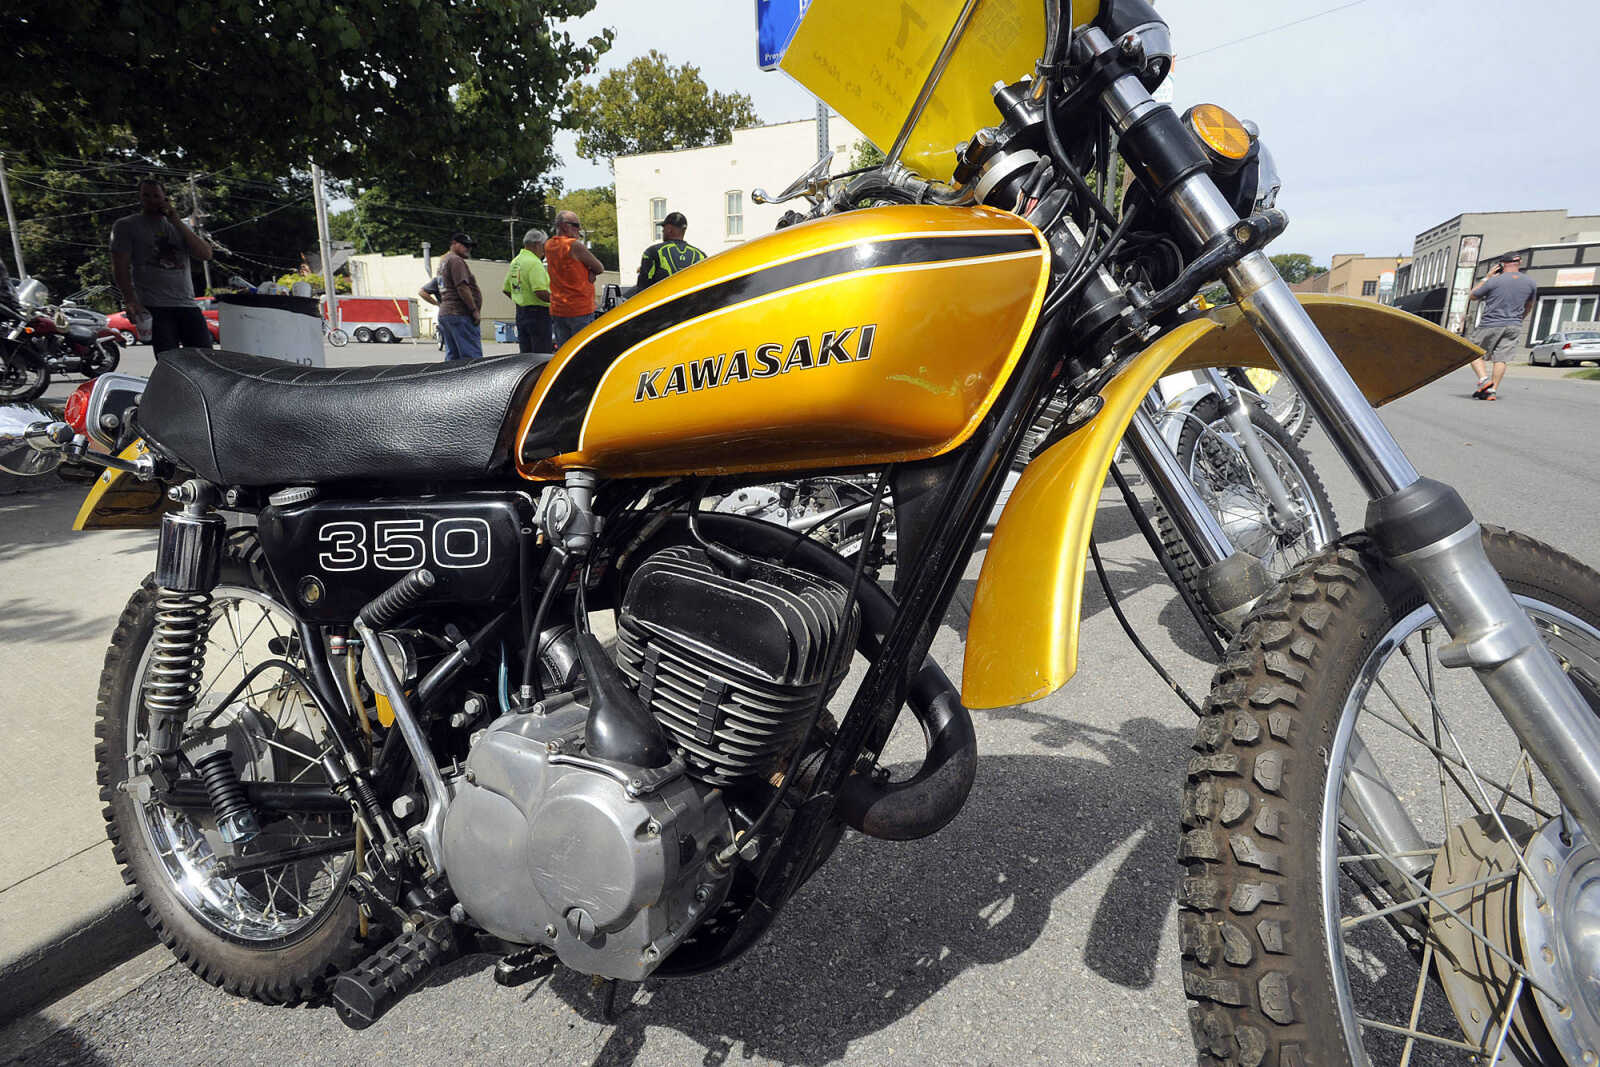 Cape girardeau honda motorcycles #1